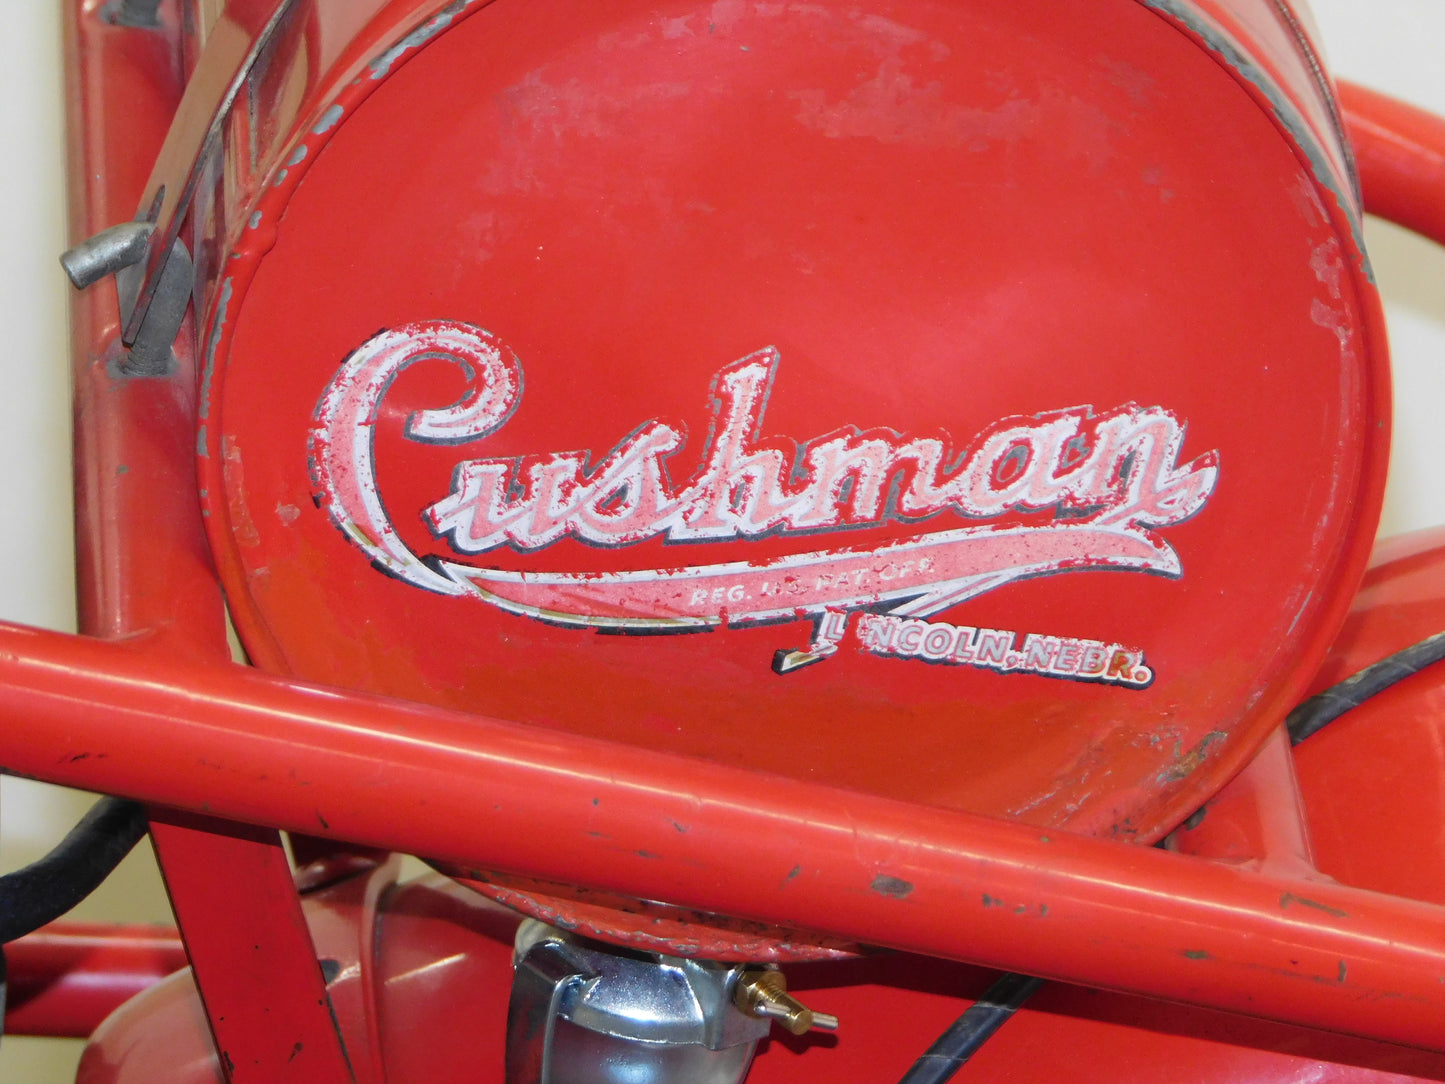 1958 Cushman Highlander Scooter